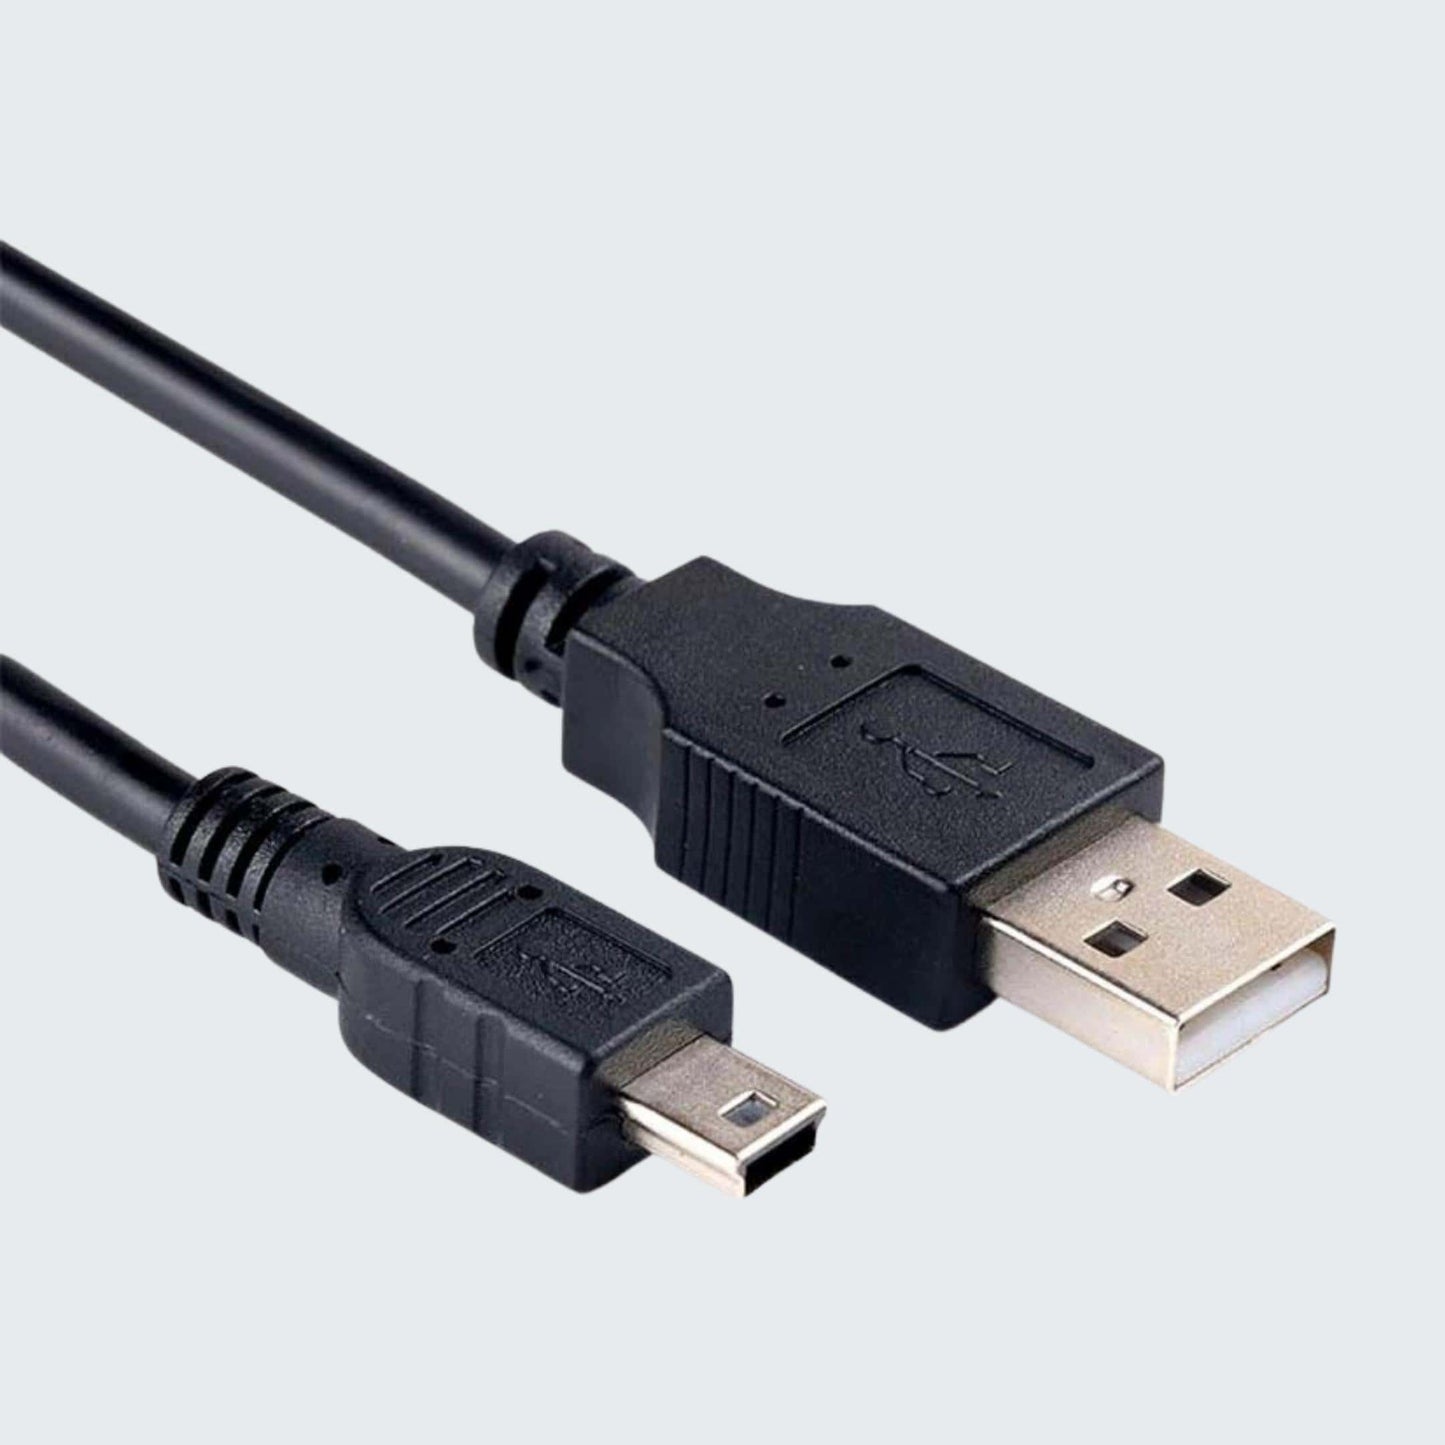 USB AMMINI 3 ft Cable